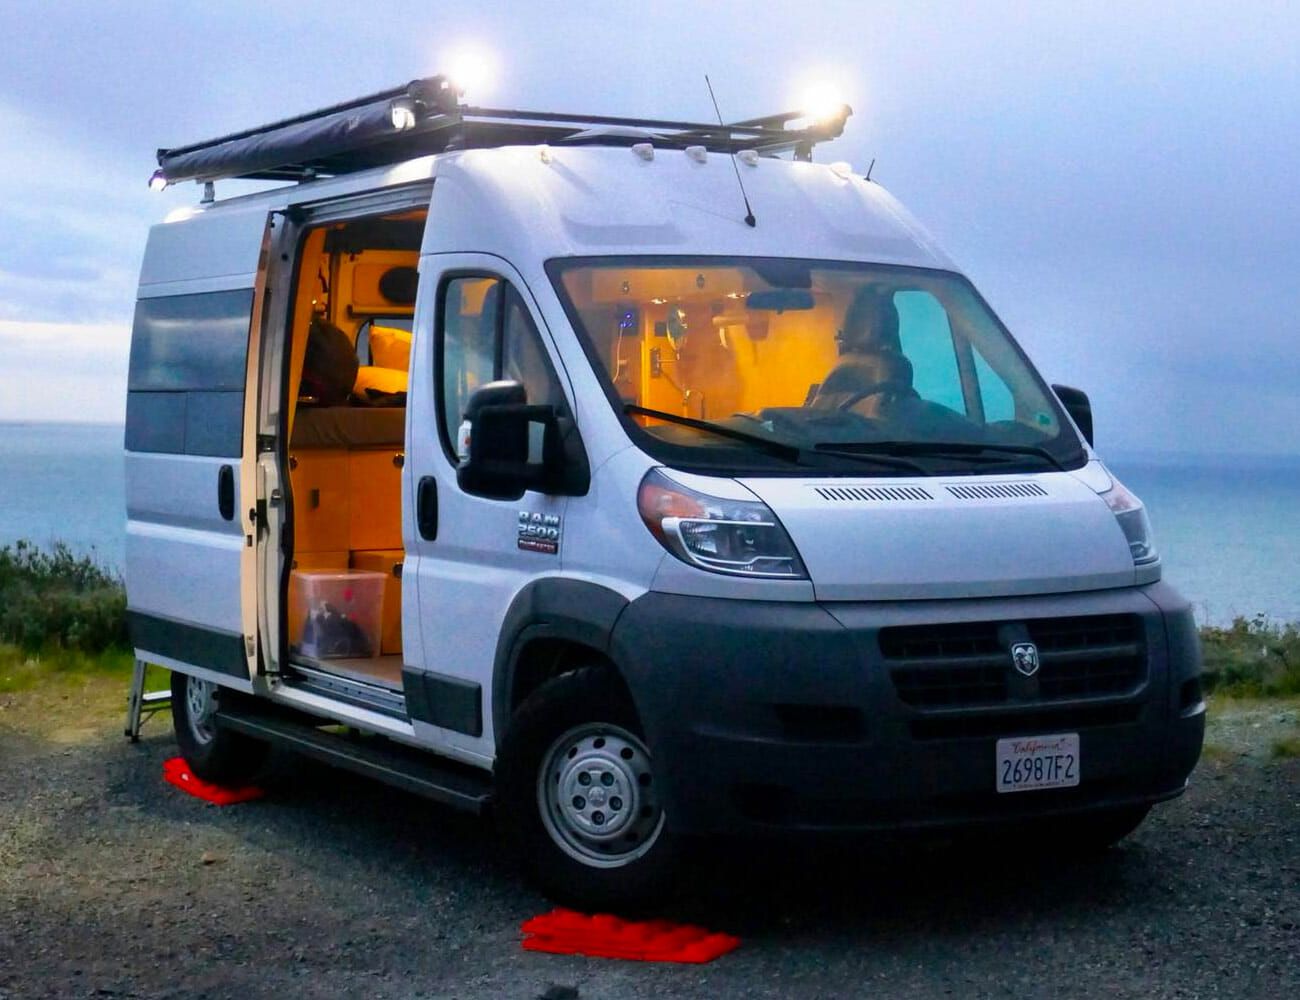 off grid adventure vans for sale